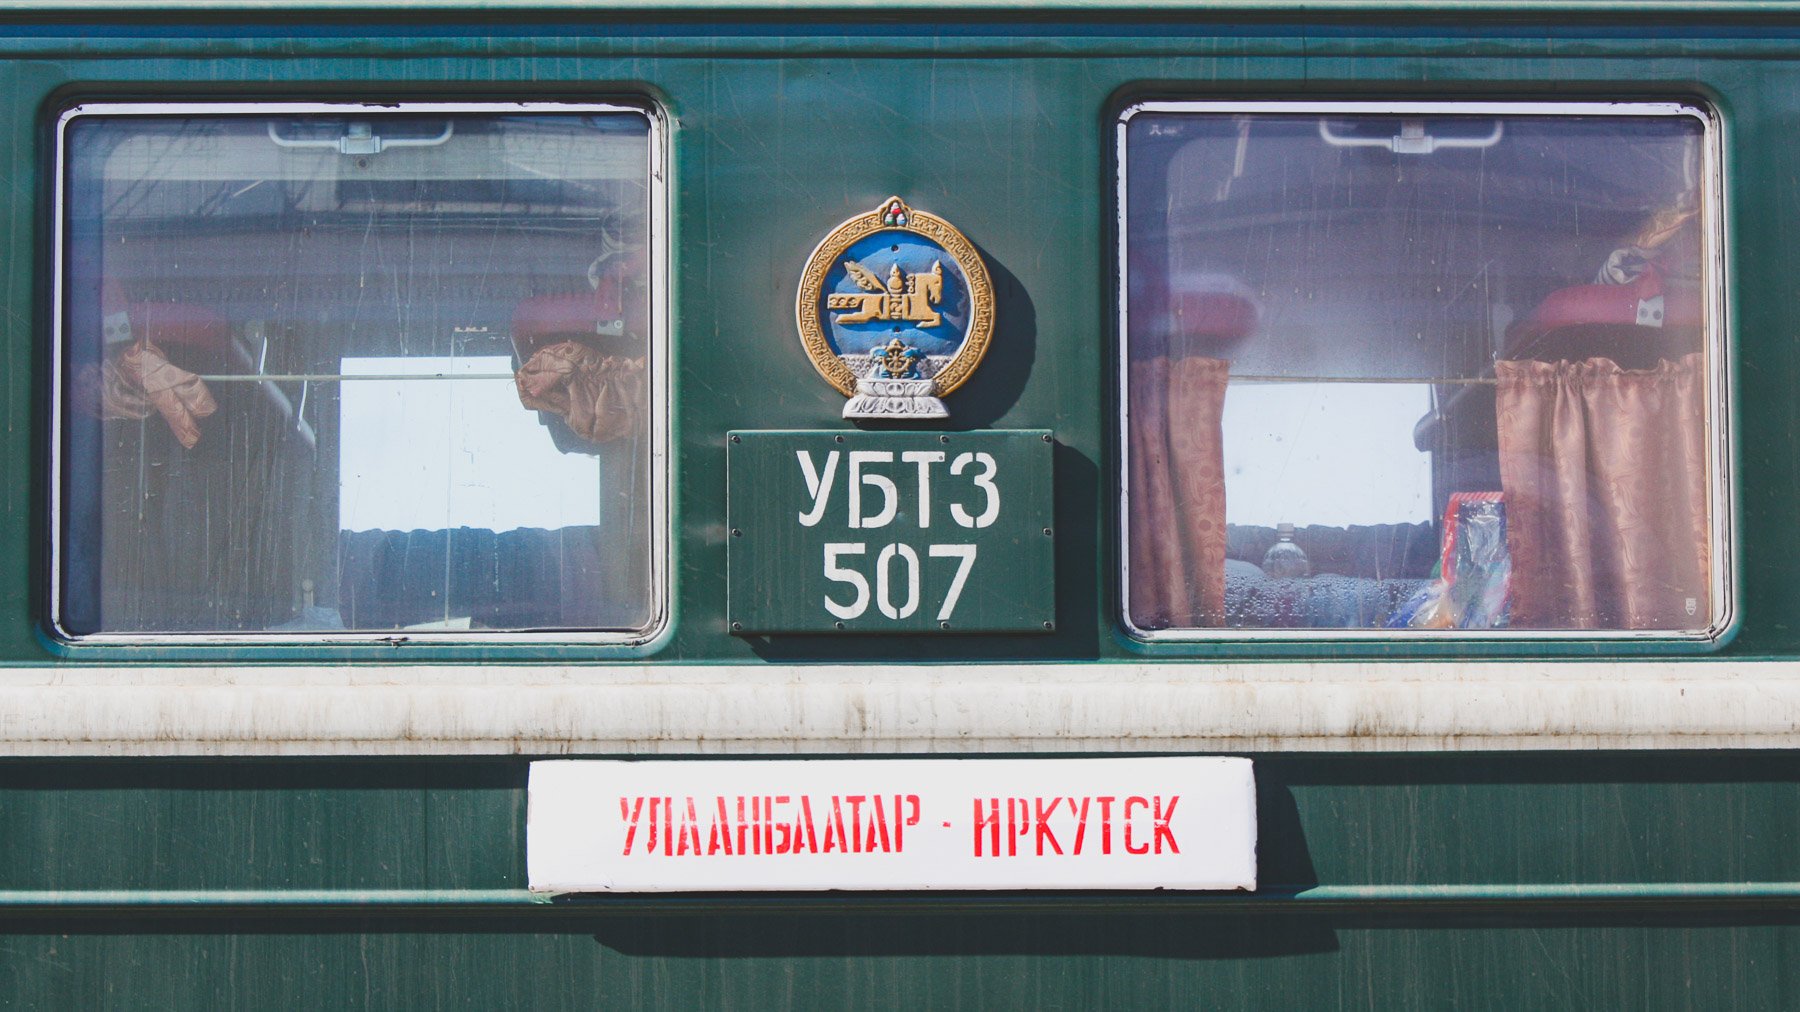 The Trans-Mongolian Railway